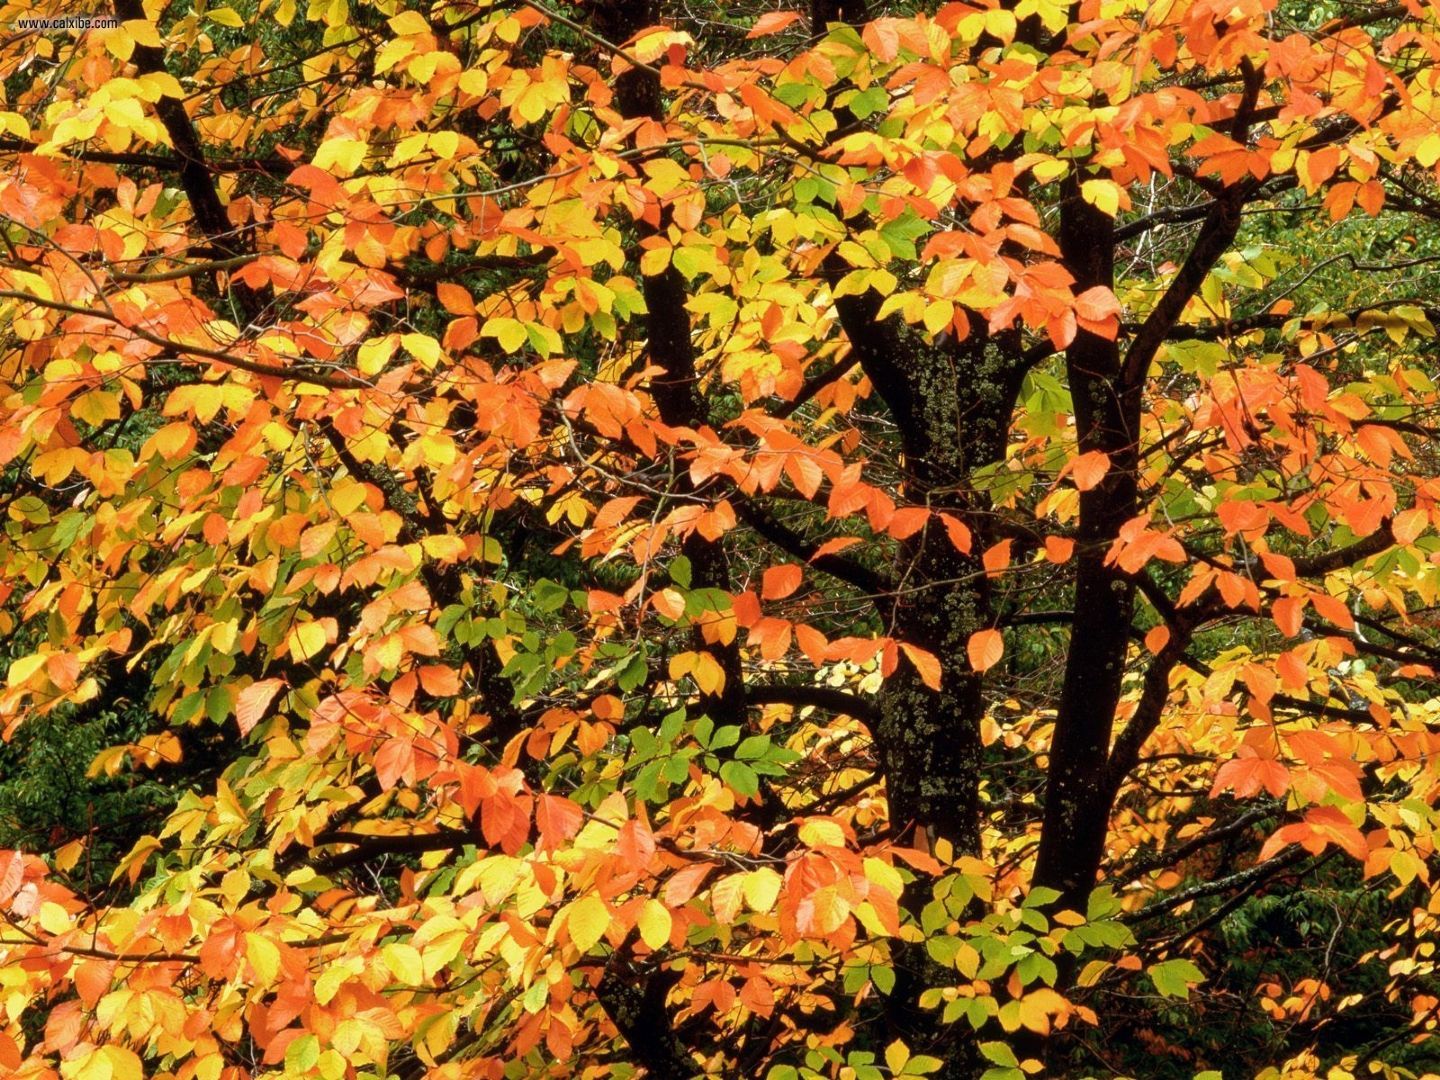 Nature: Beech Tree In Autumn Washington Park Portland Oregon, picture nr. 19693